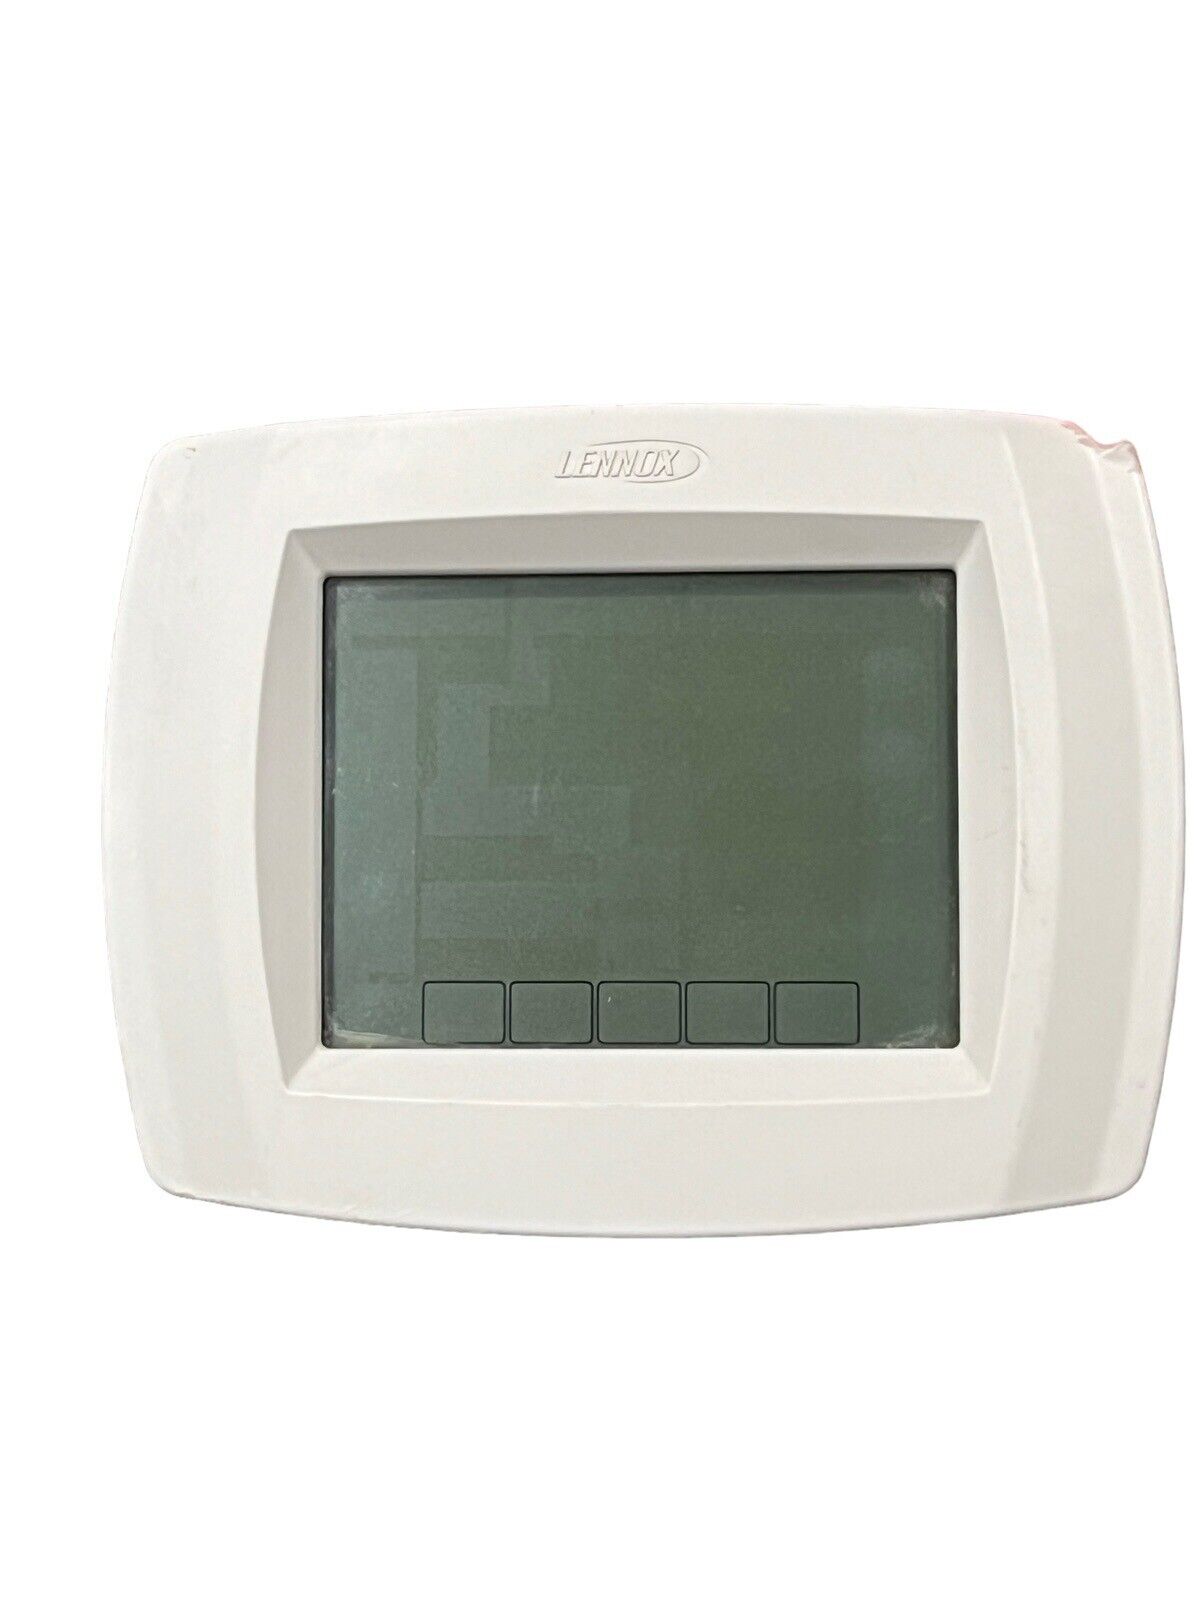 LENNOX X4146 ComfortSense 5000 Touch Screen / Backlight  Thermostat TH8110U1029